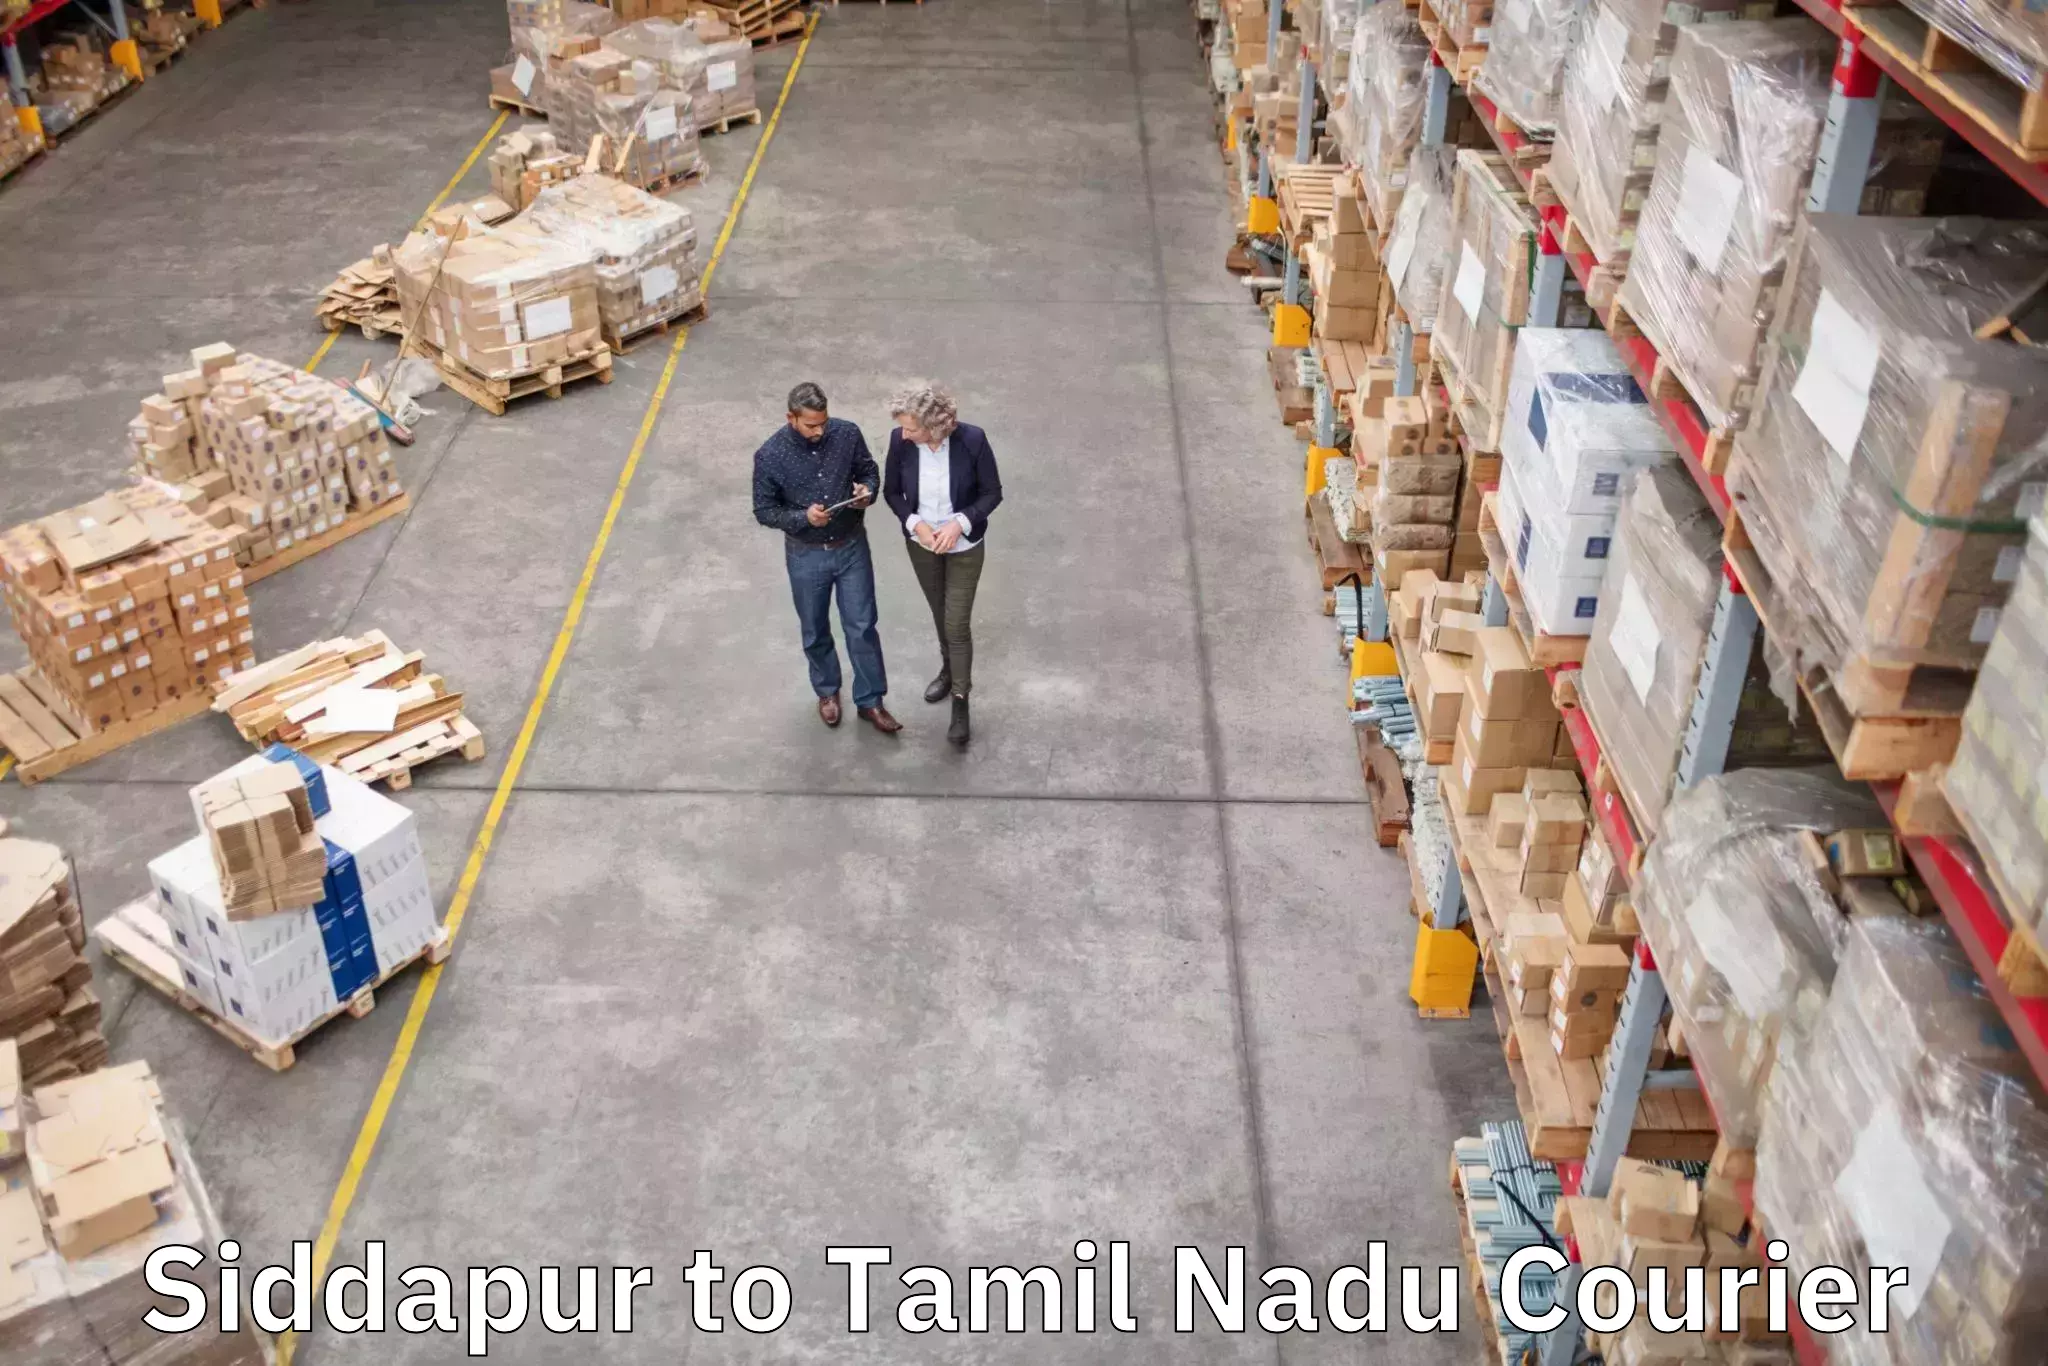 Luggage transport company Siddapur to Tamil Nadu